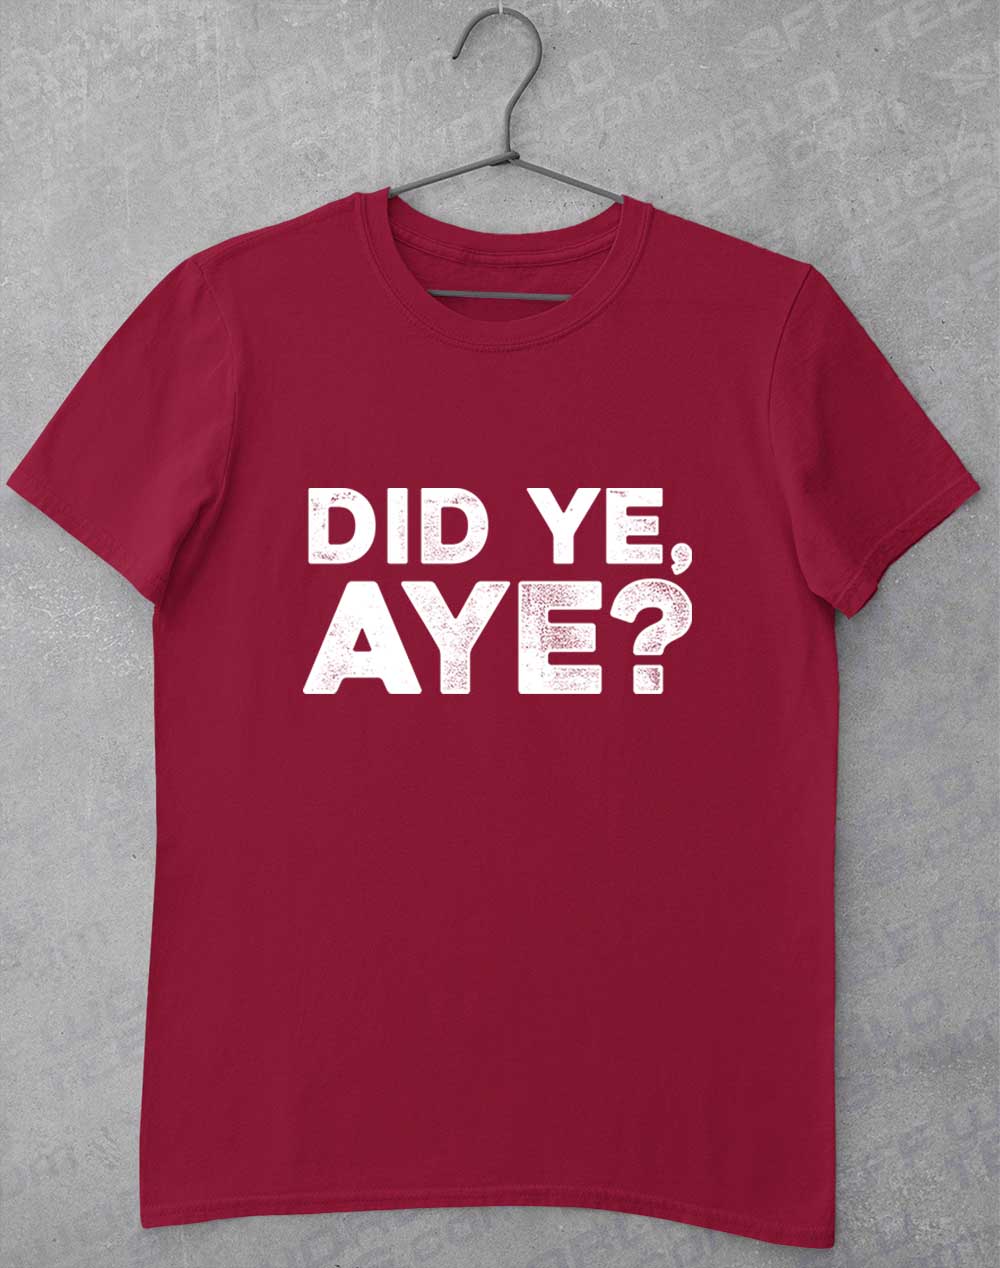 Cardinal Red - Did Ye Aye T-Shirt